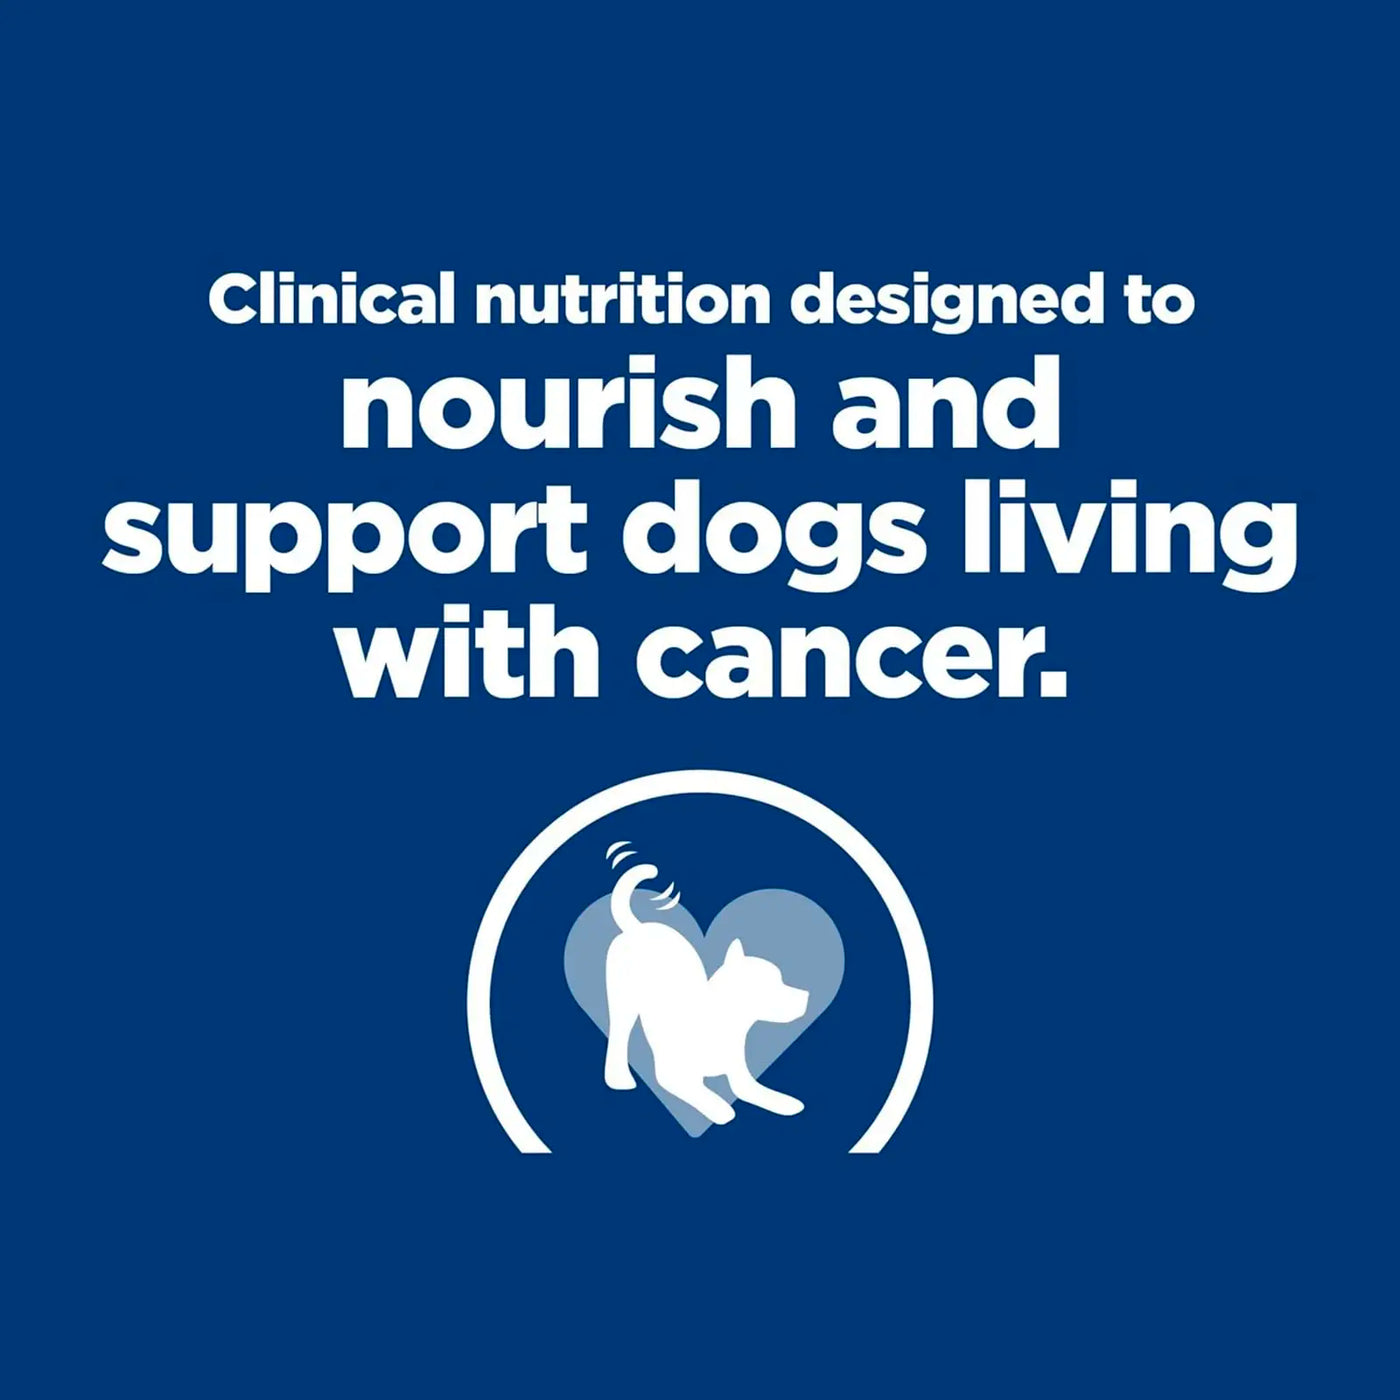 Hill's Prescription Diet - Canine ONC Cancer Care